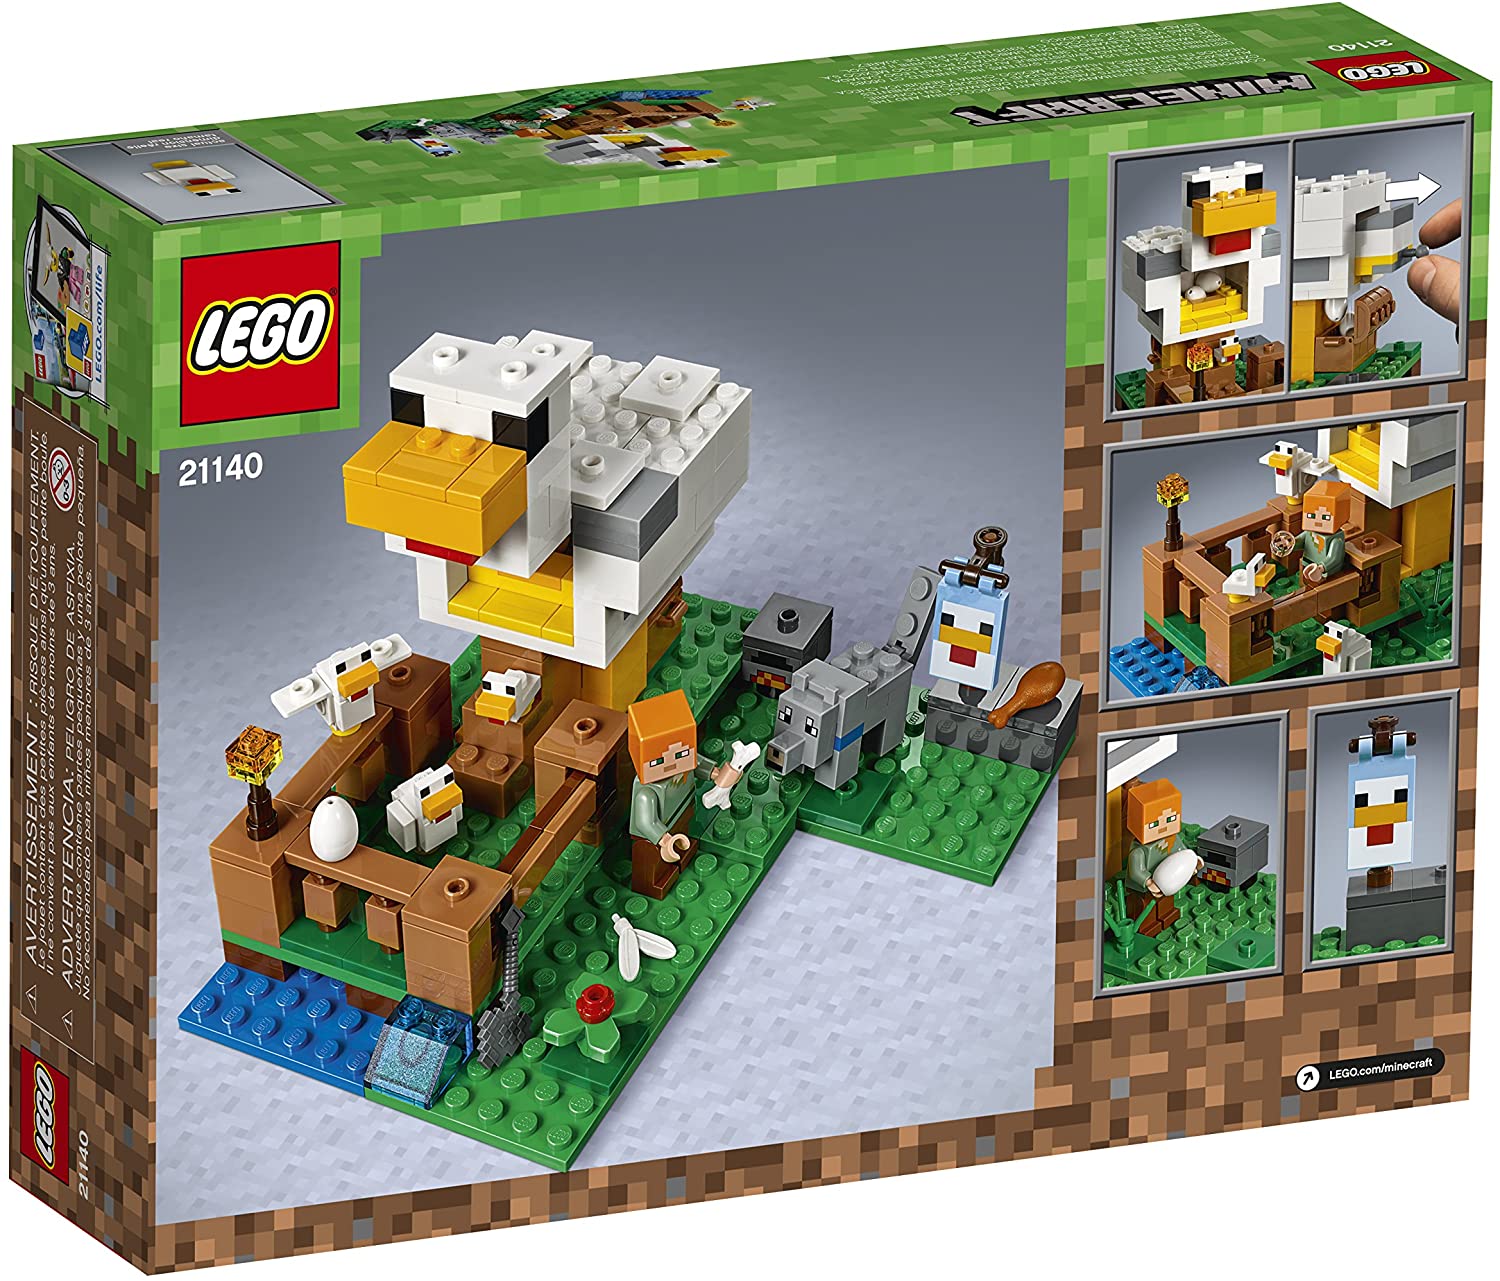 Minecraft LEGO Building Kit